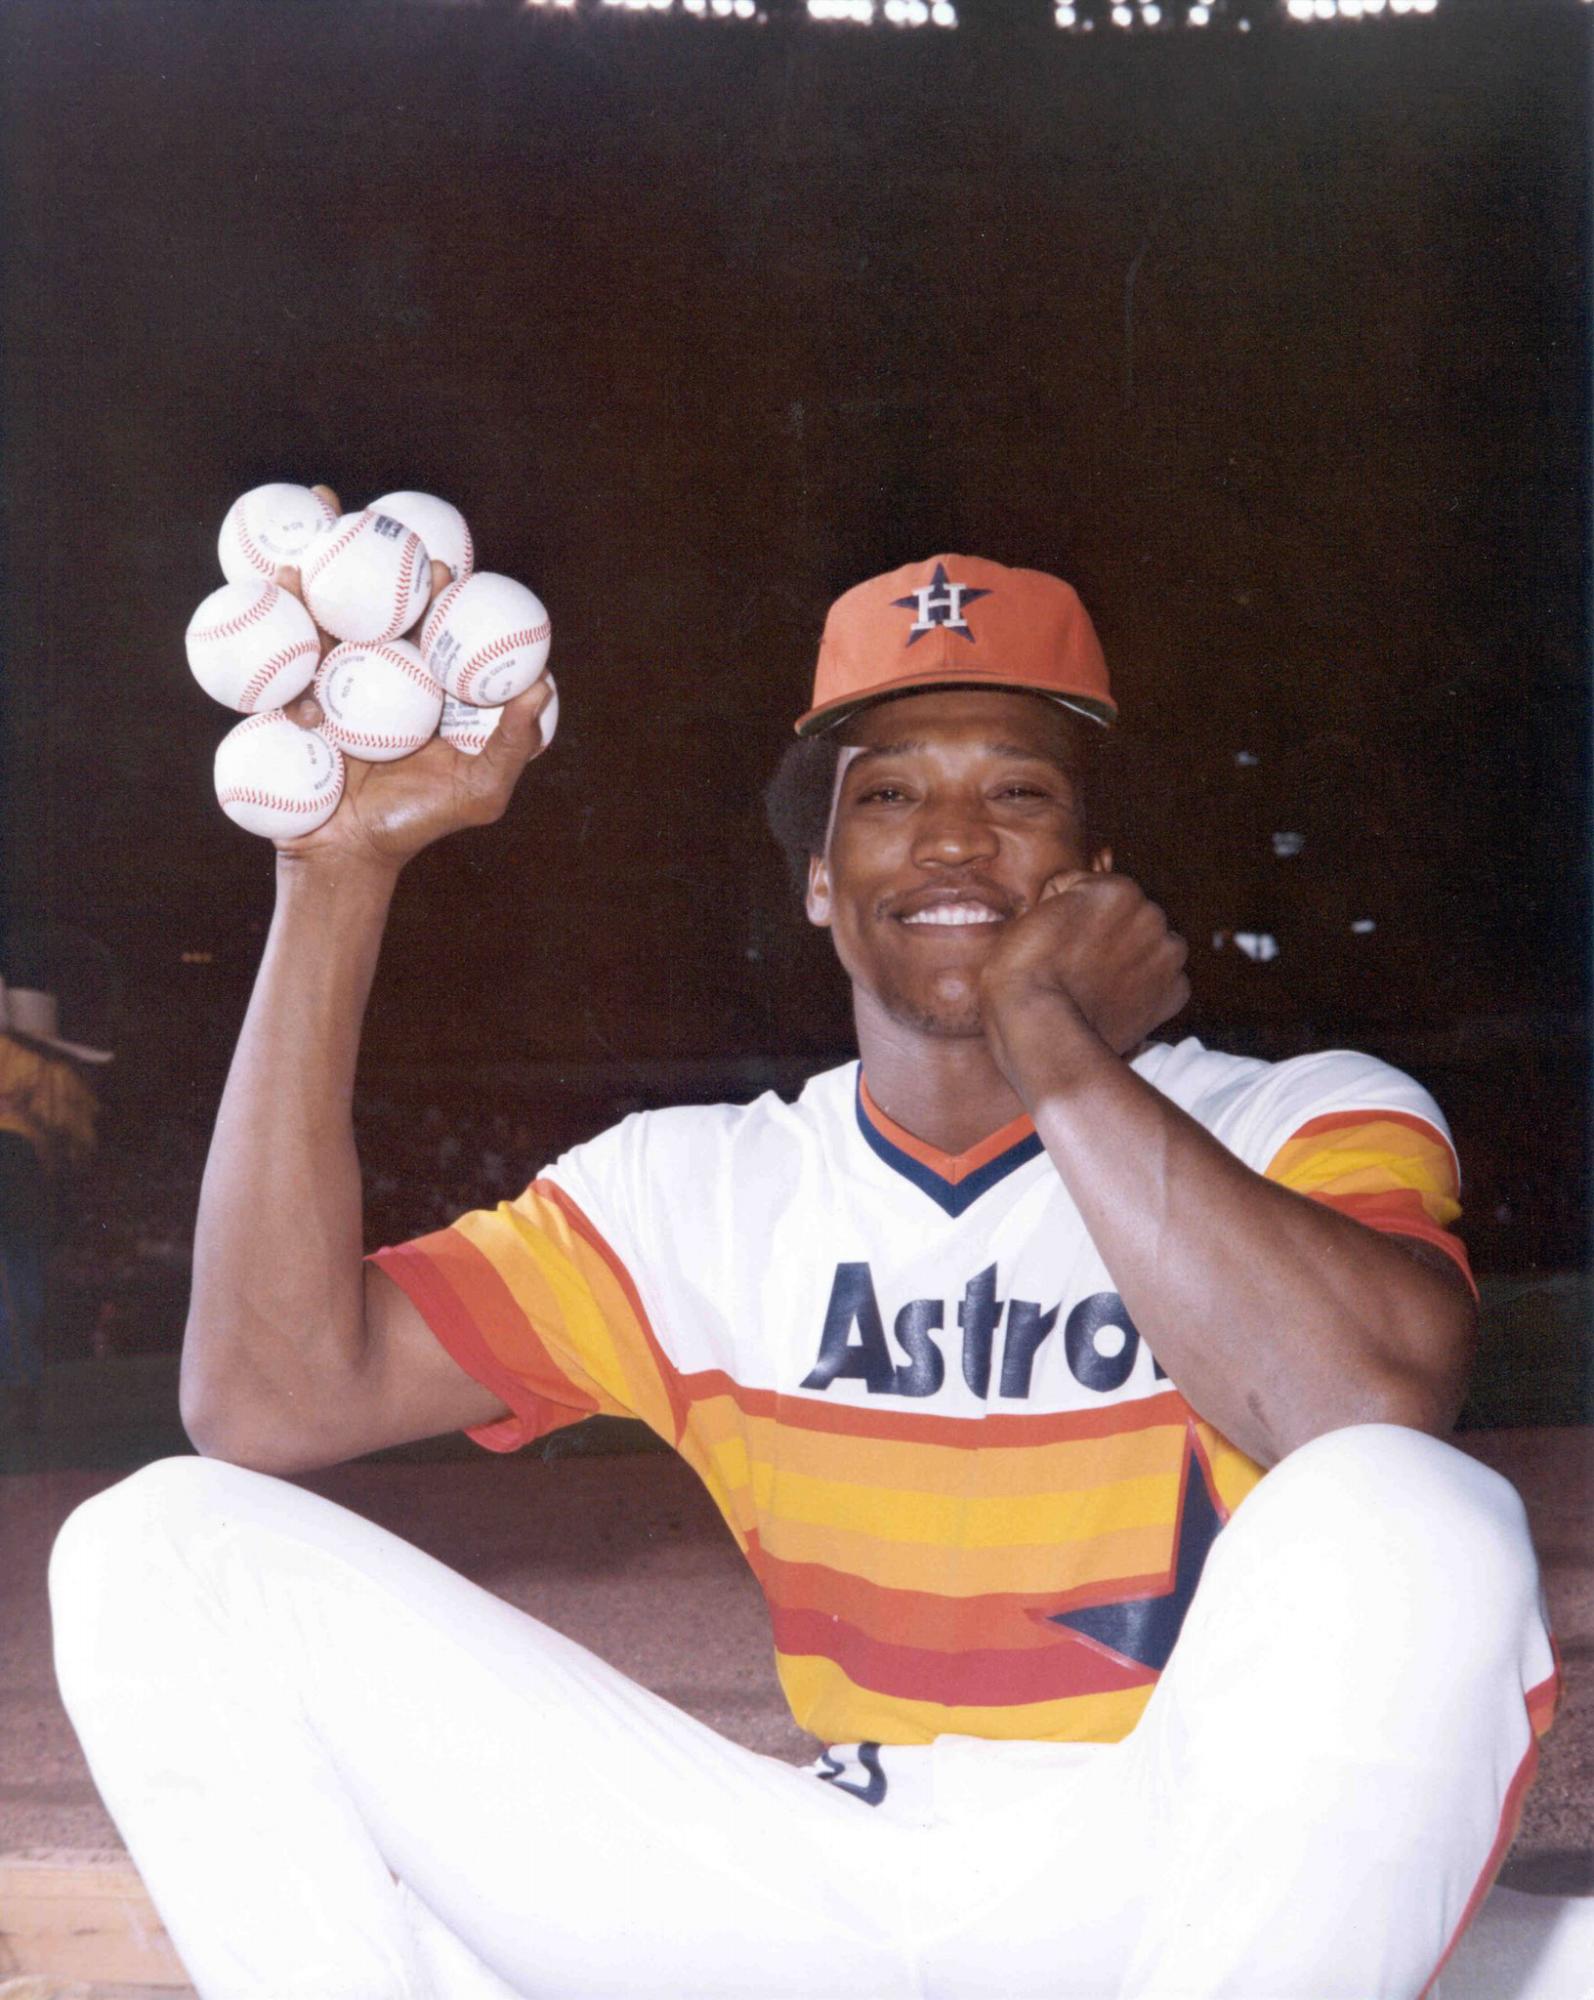 $!Fallece J.R. Richard, ex pítcher leyenda de Astros de Houston